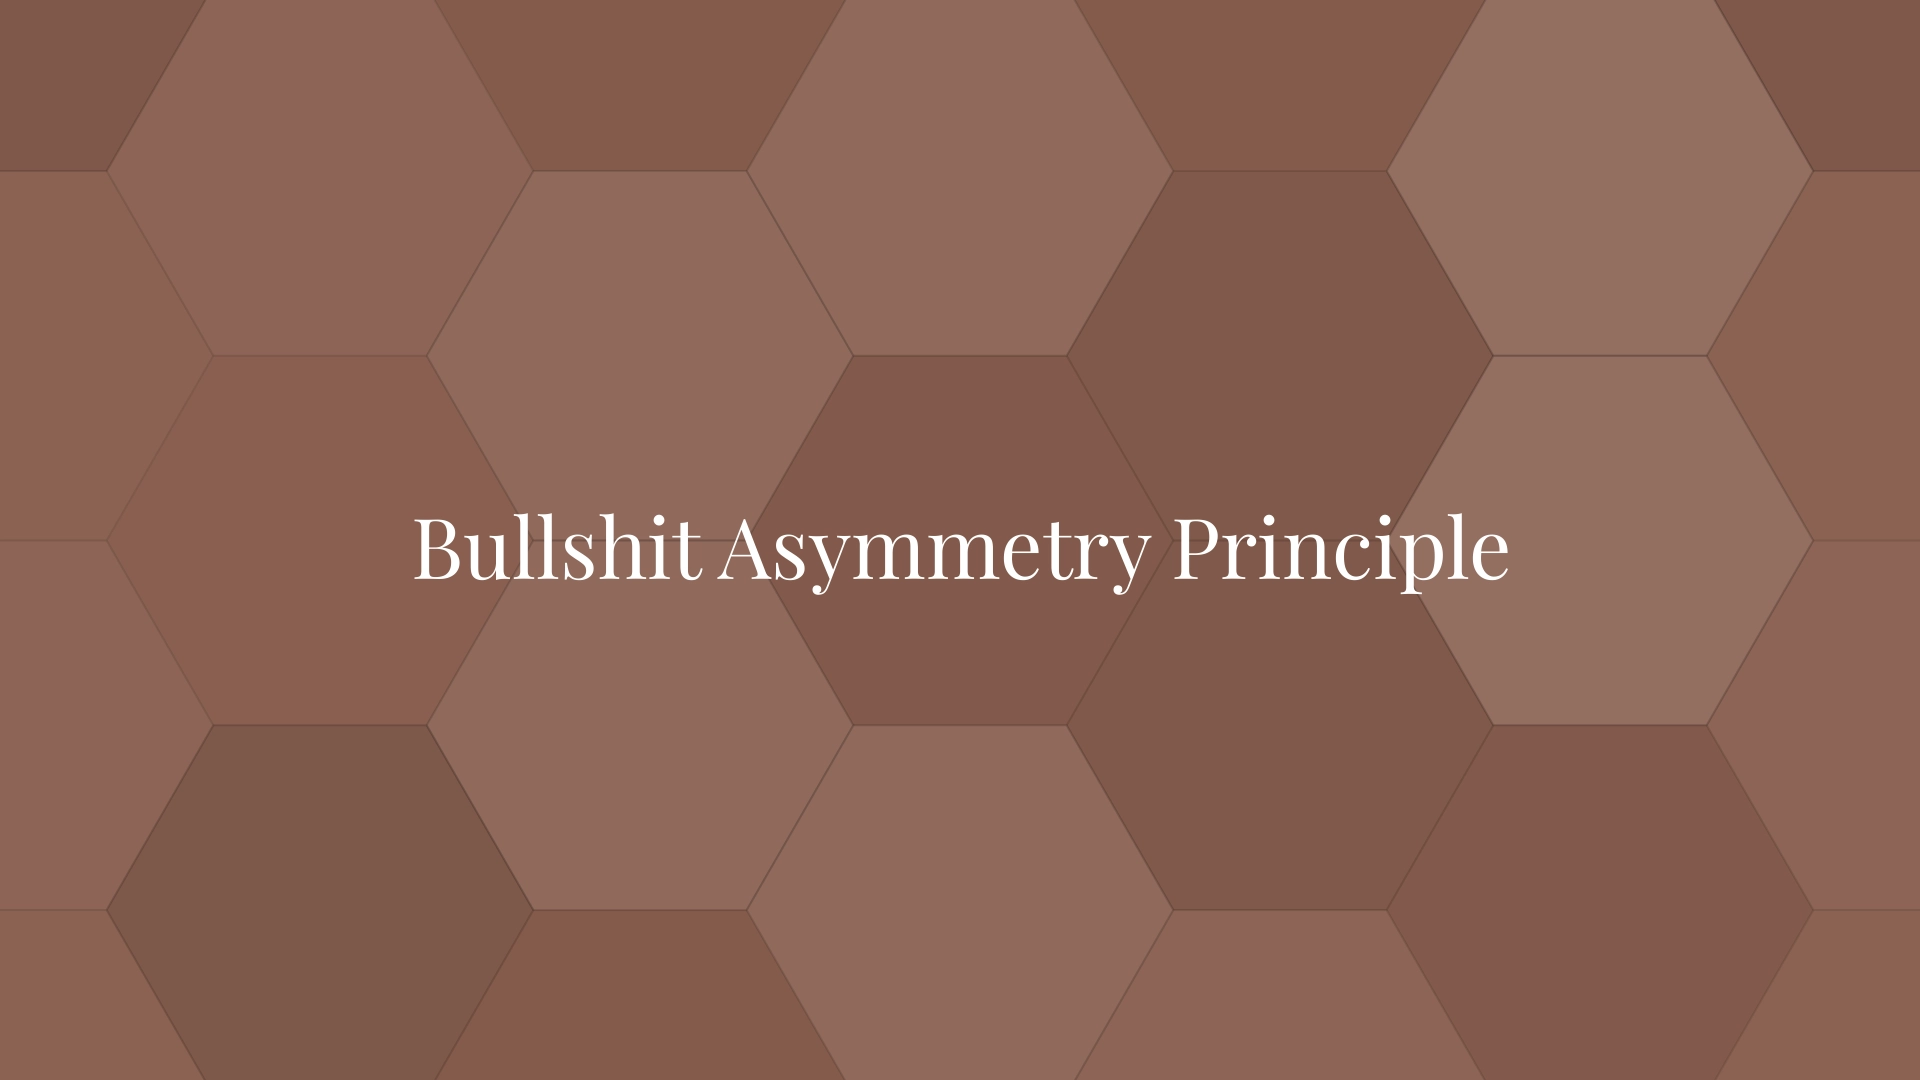 Bullshit Asymmetry Principle